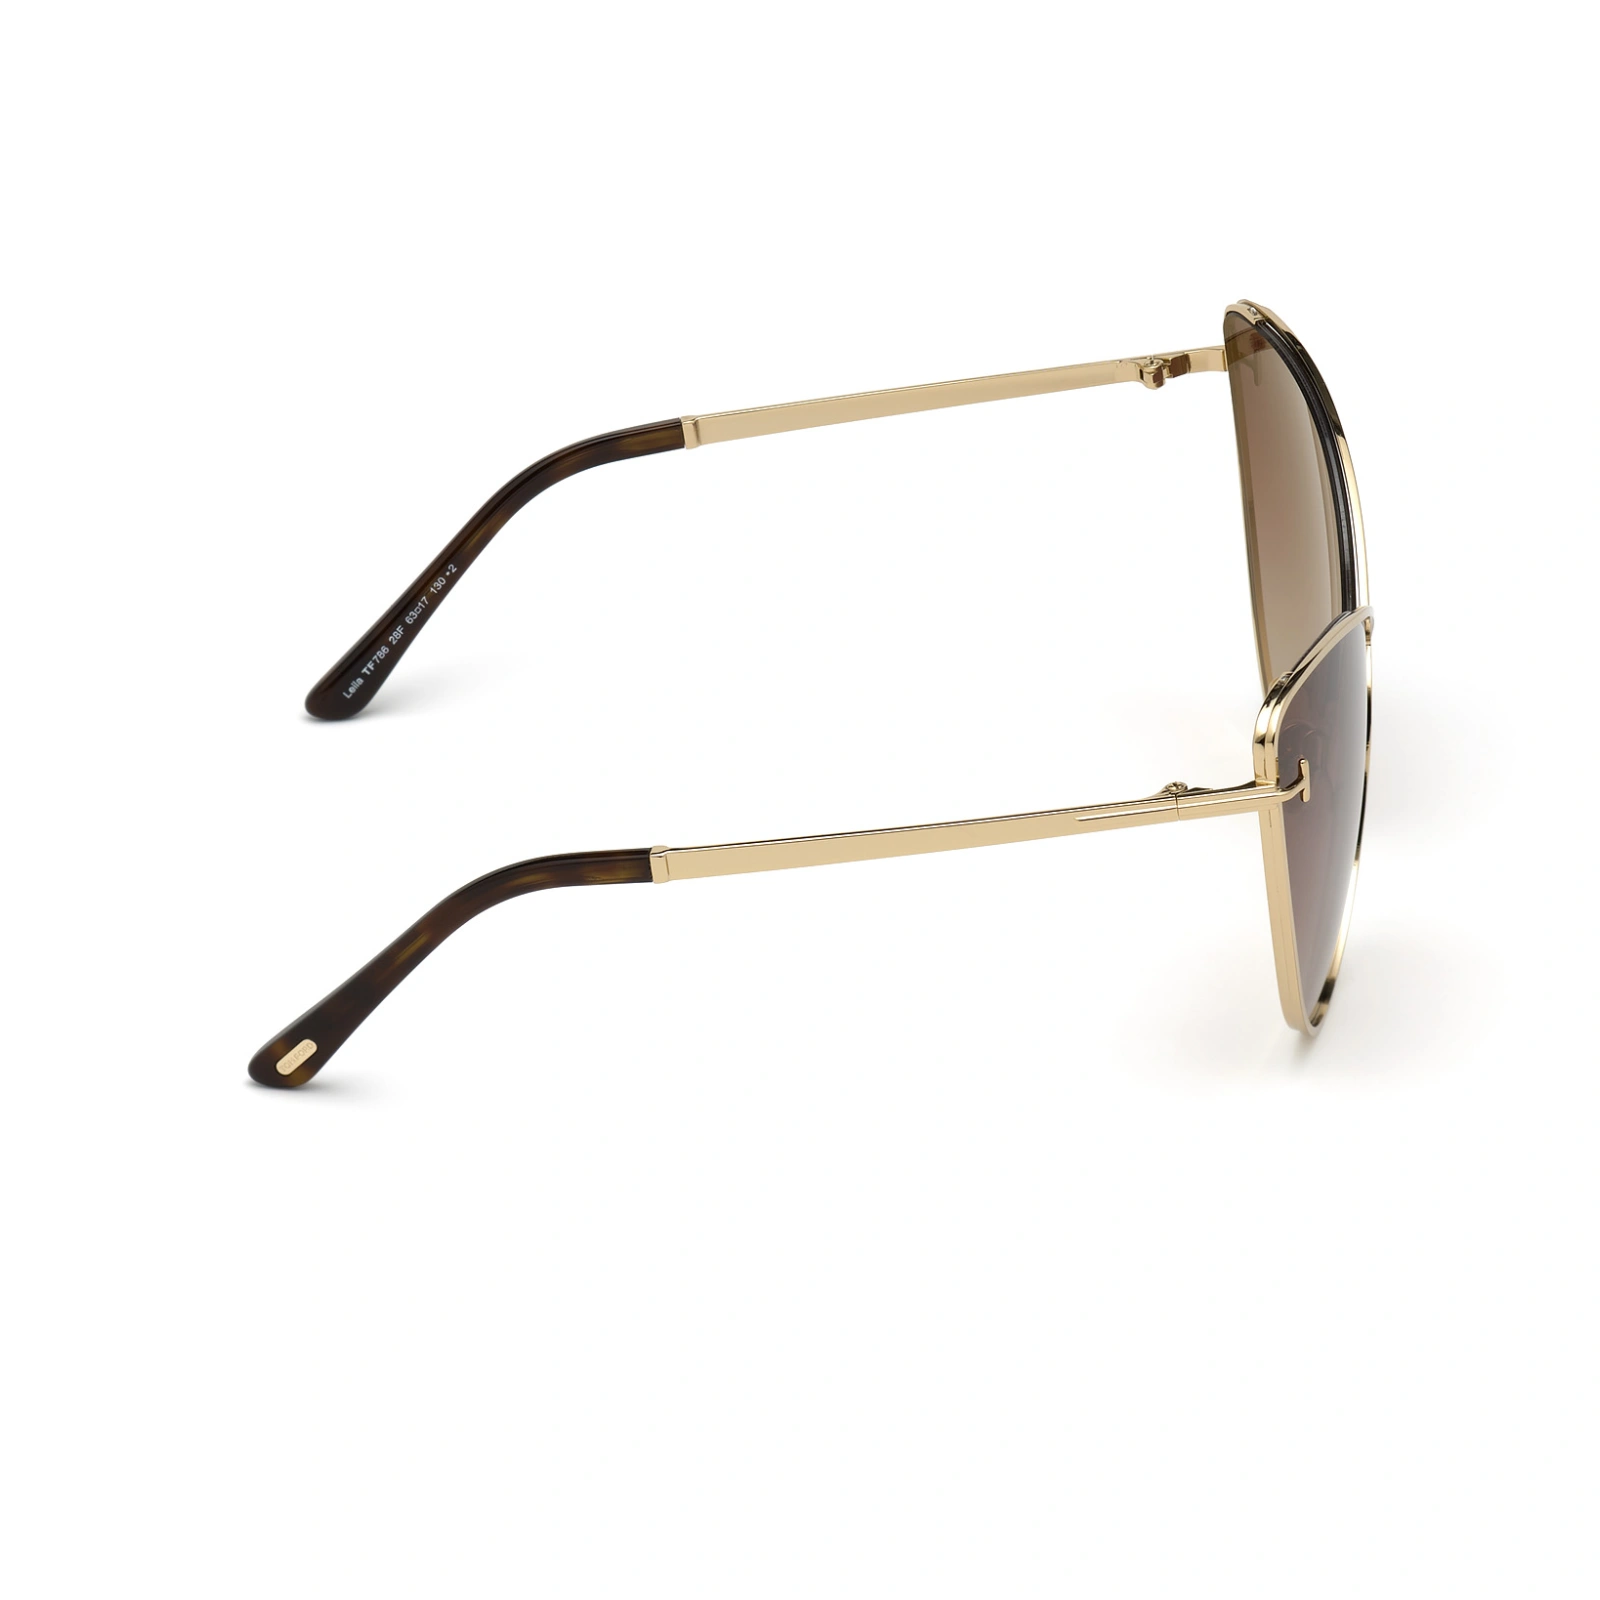 Tom Ford Sunglasses Tom Ford Sunglasses FT0786 28F 63mm Leila Eyeglasses Eyewear UK USA Australia 